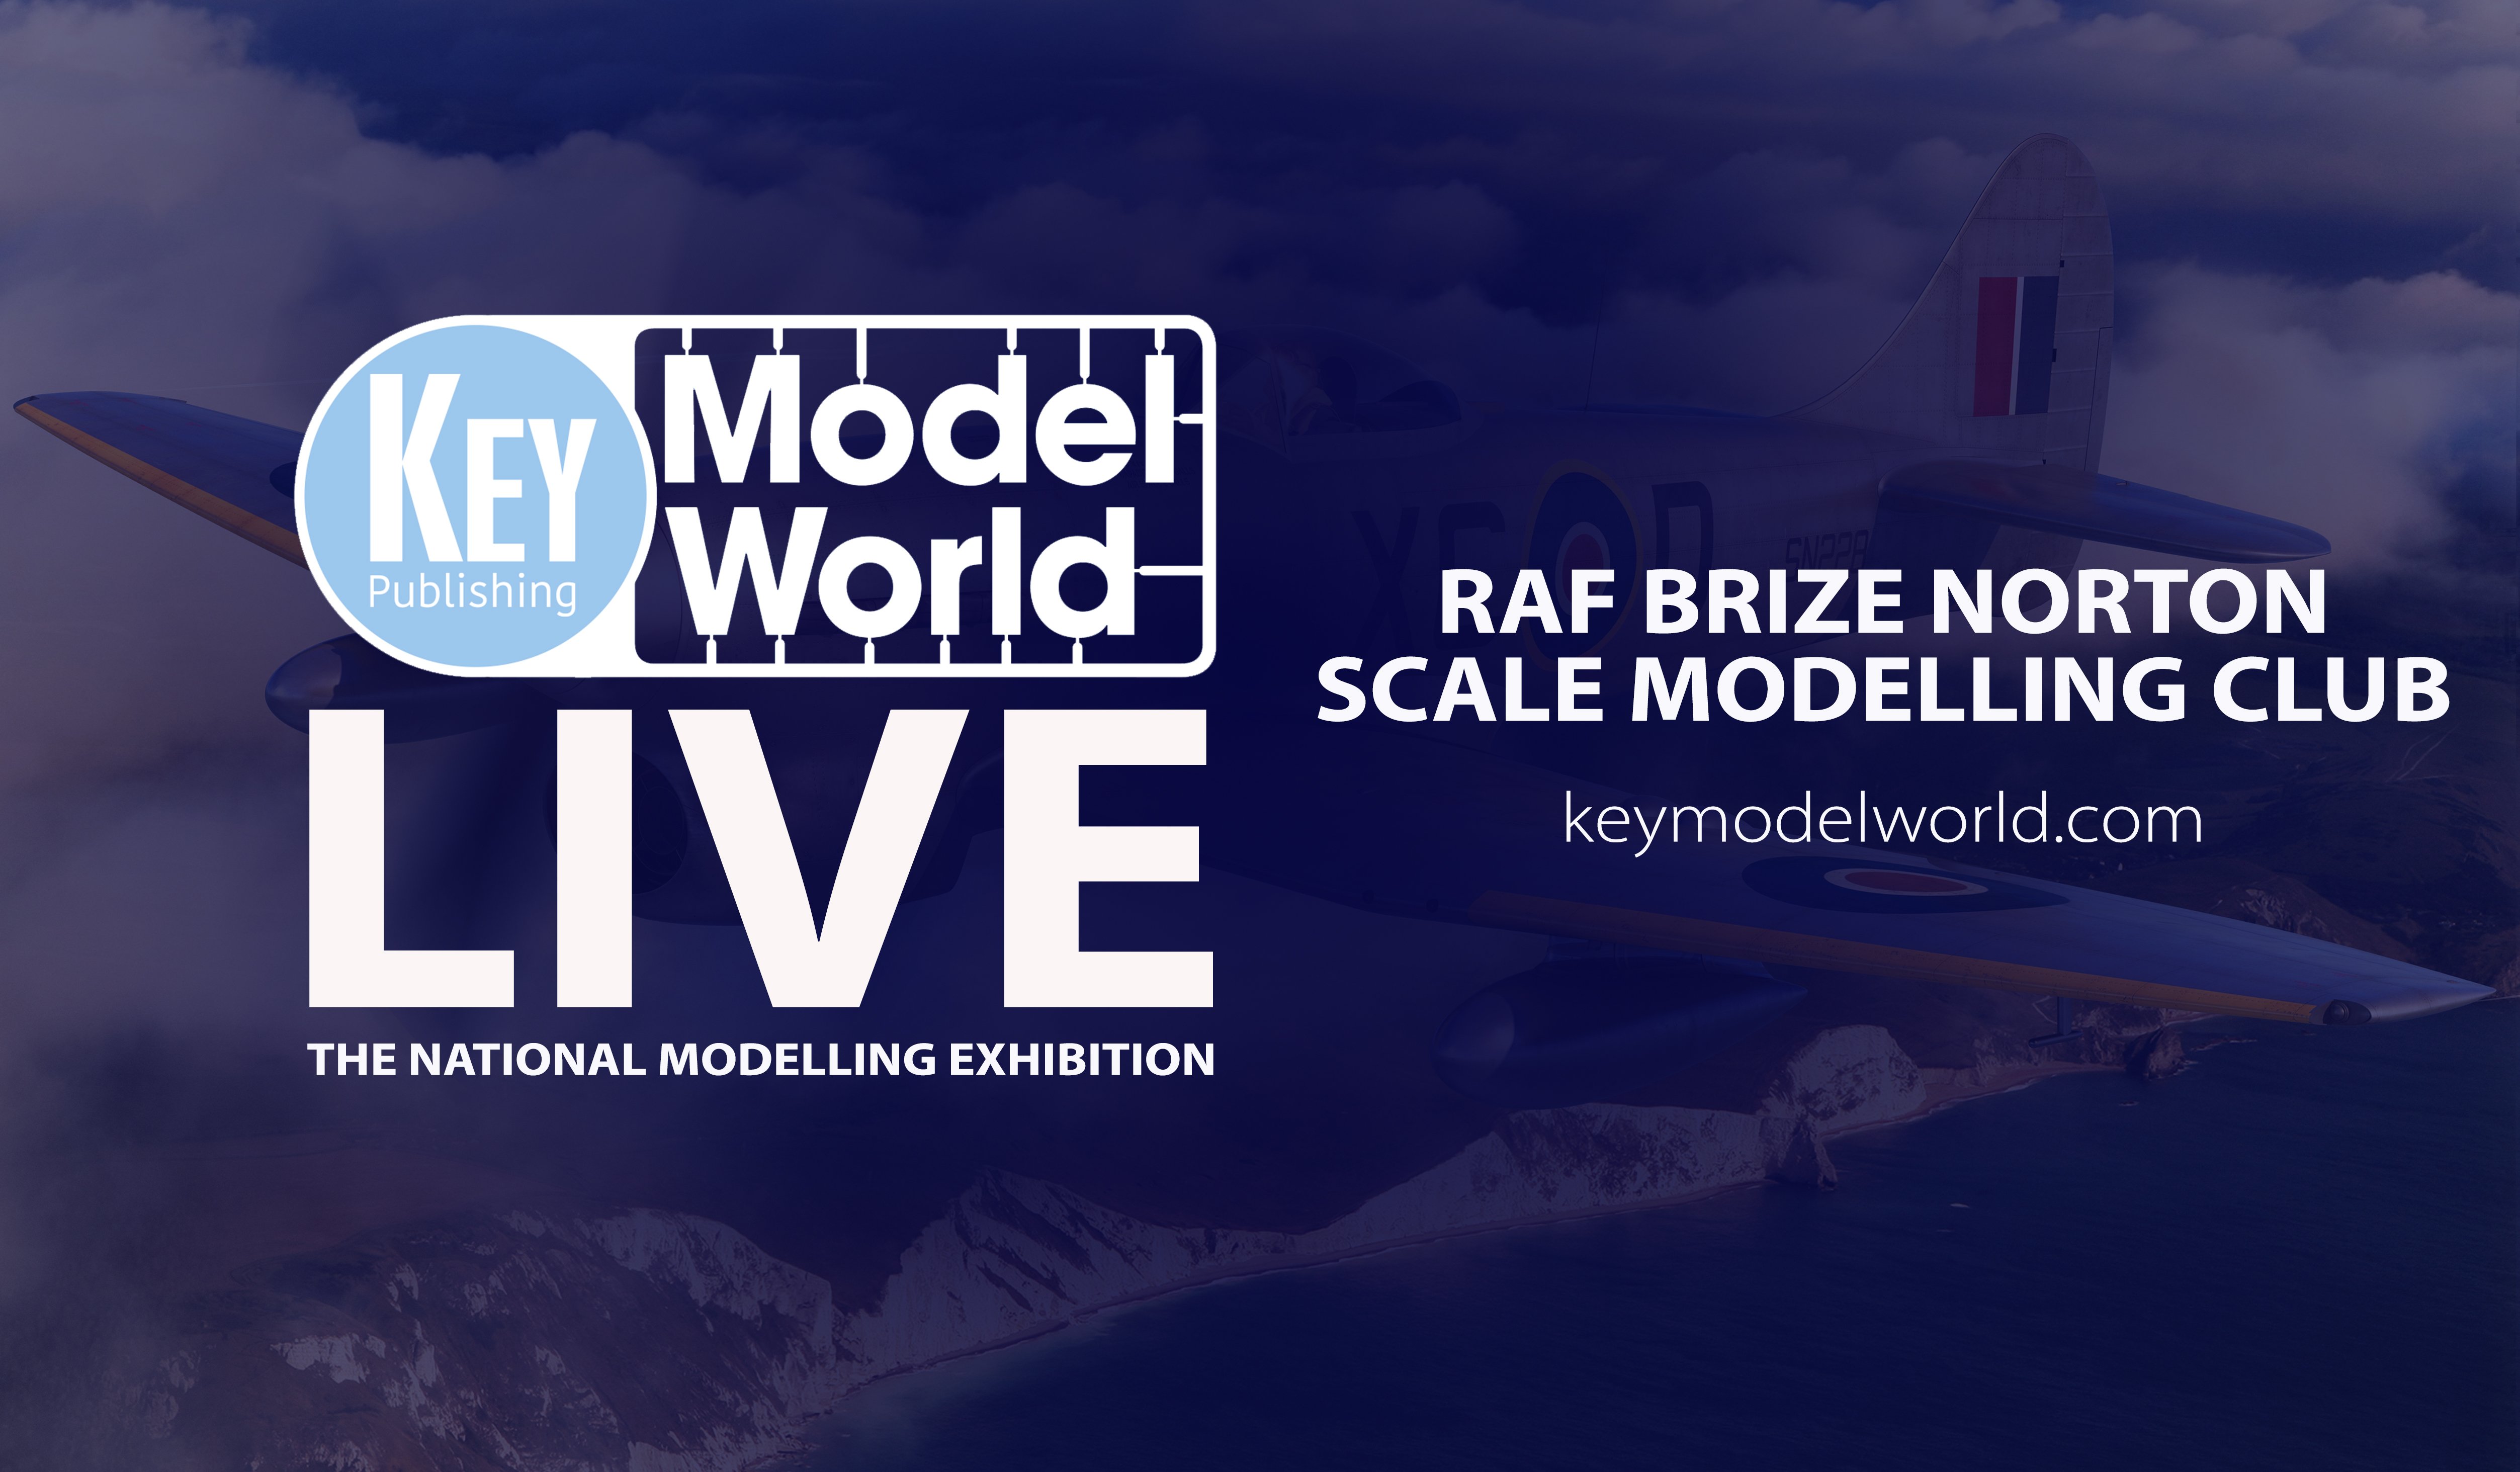 RAF Brize Norton Scale Modelling Club